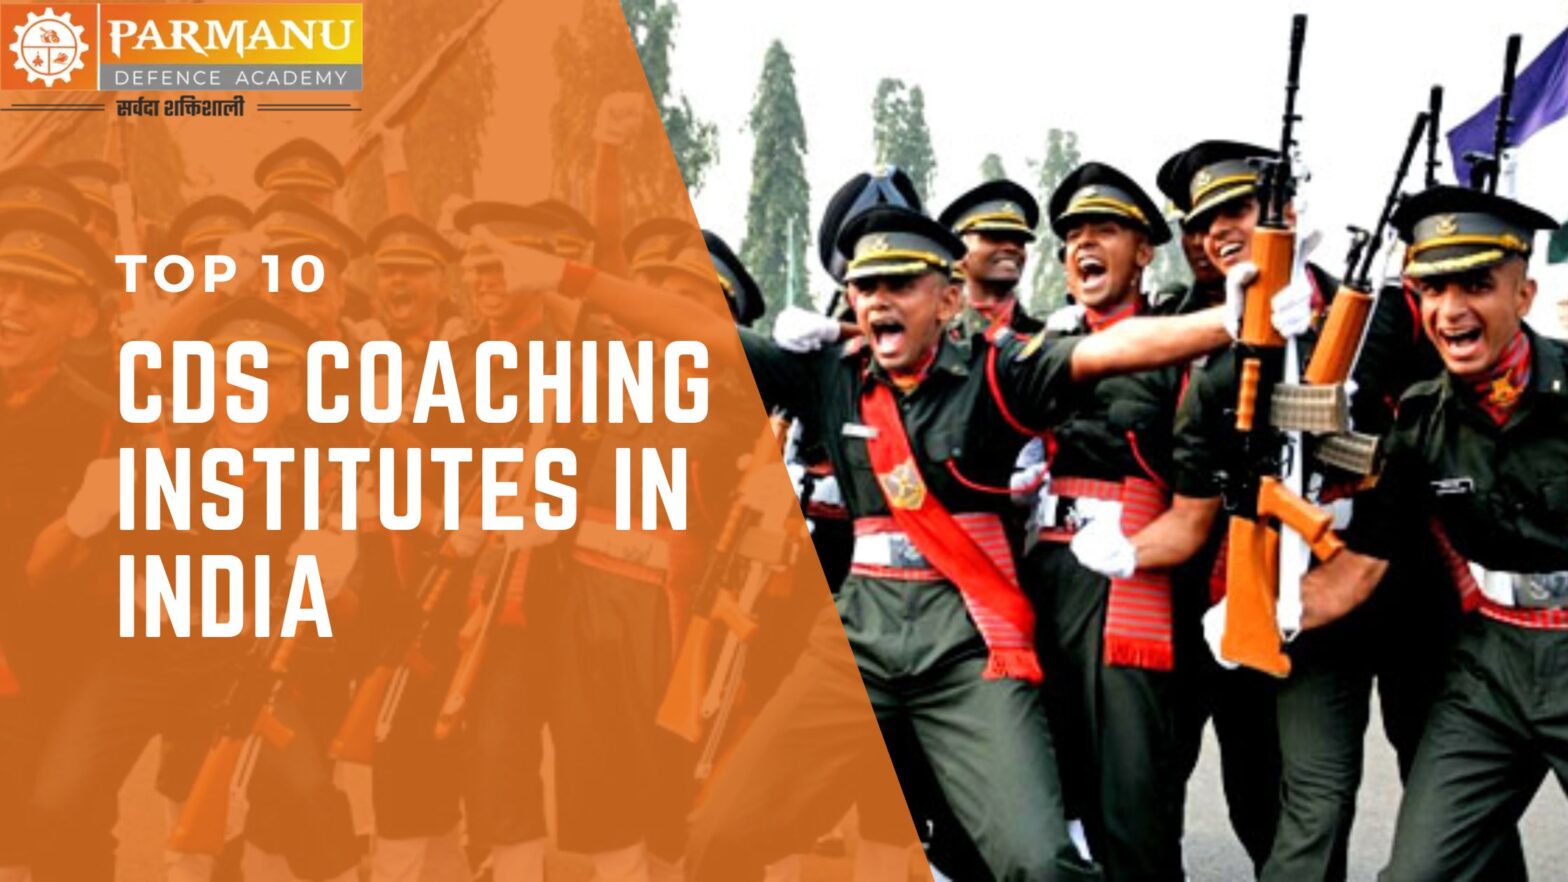 Top 10 CDS Coaching Institutes in India